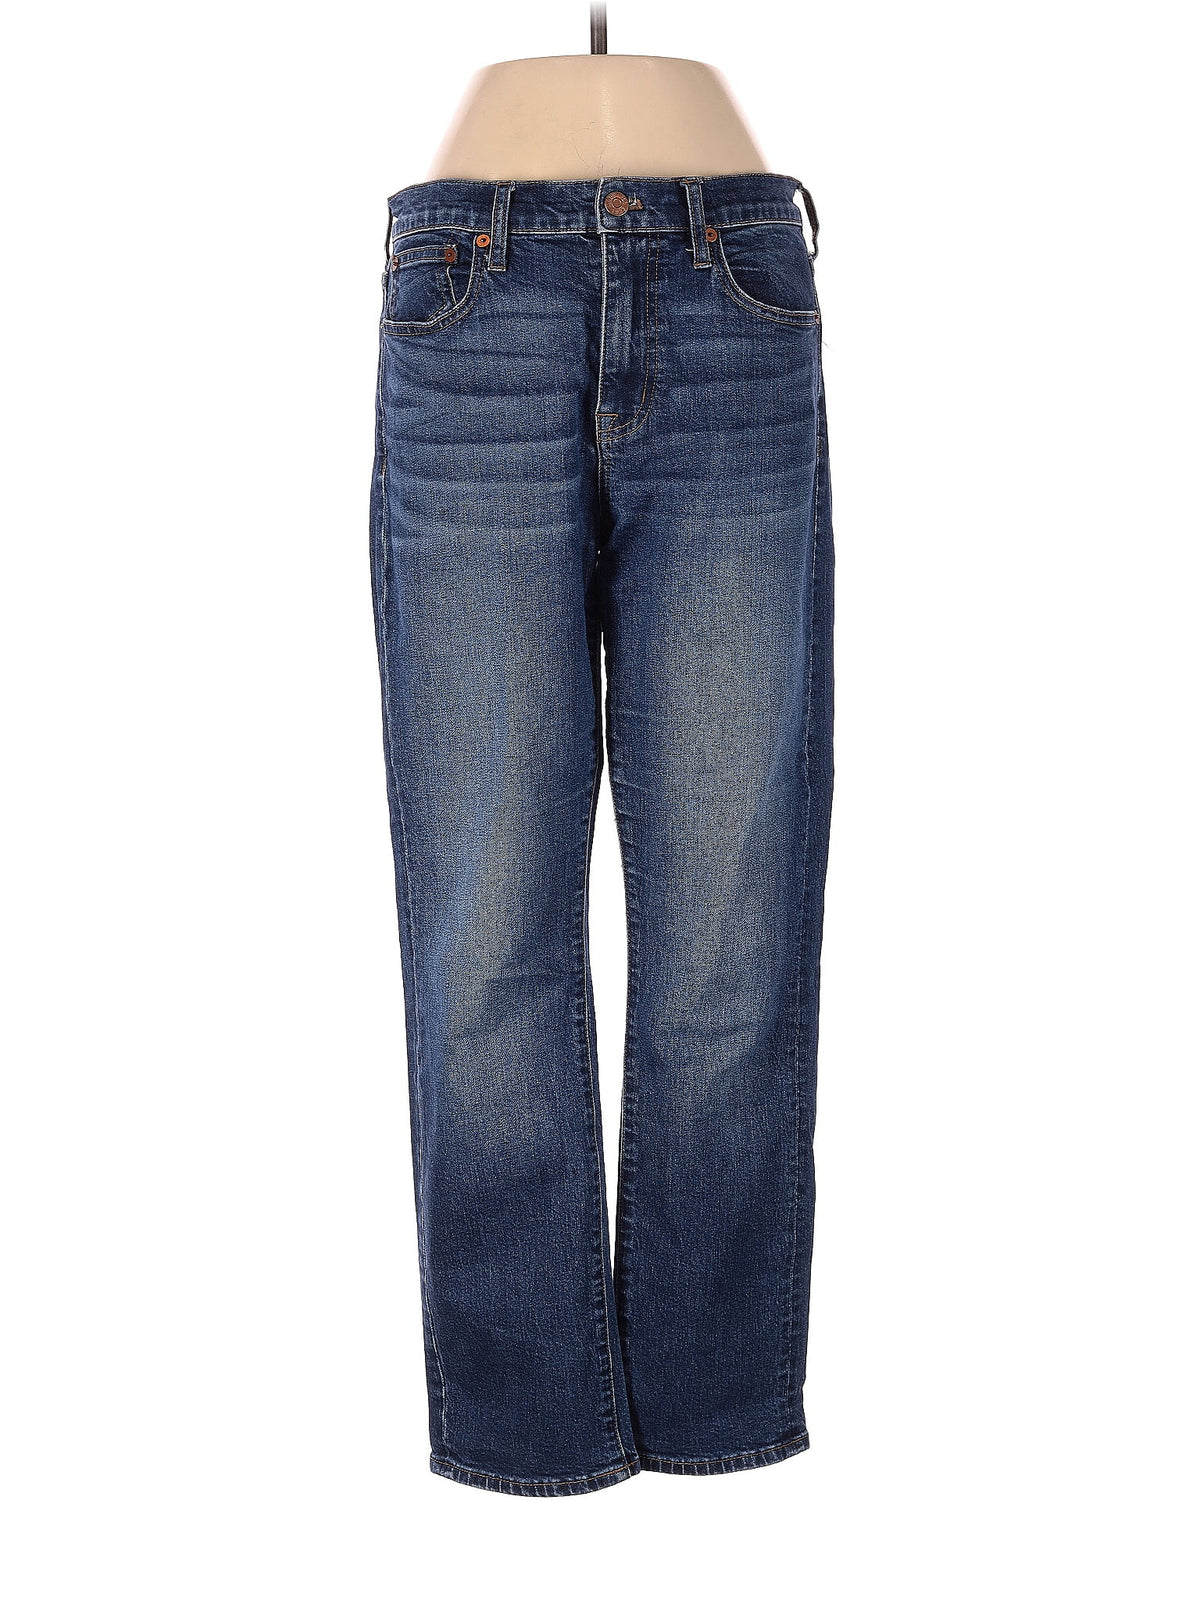 High-Rise Straight-leg Cruiser Straight Jeans In Lana Wash in Medium Wash waist size - 27